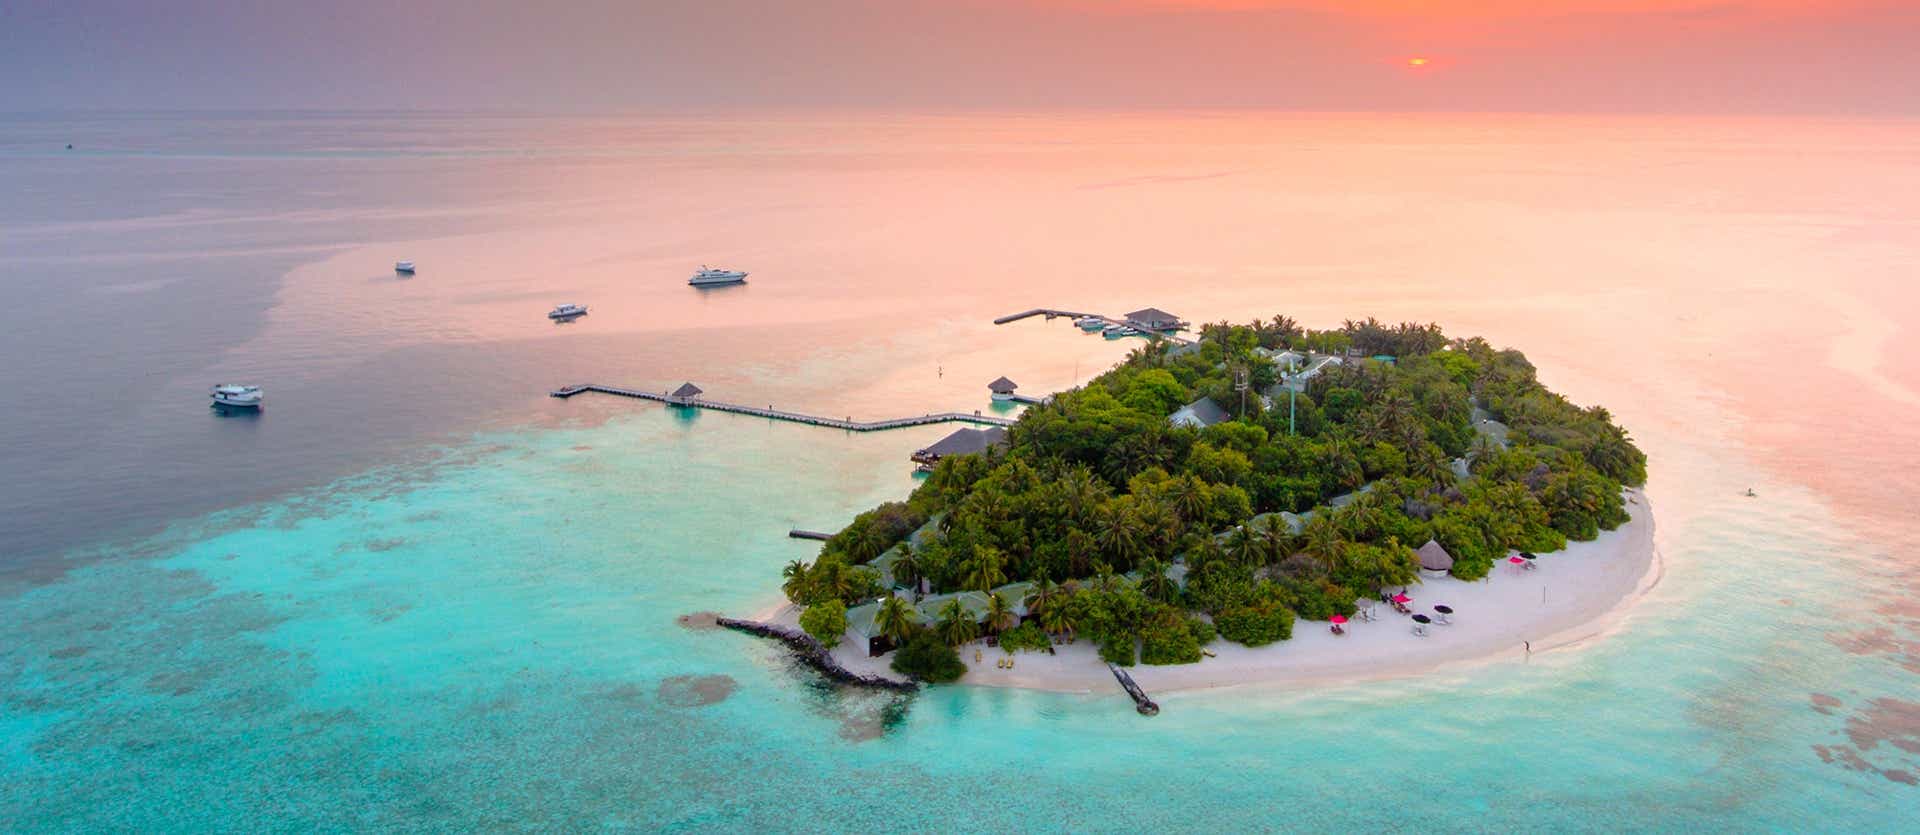 Eriyadu Island Resort <span class="iconos separador"></span> Maldives
